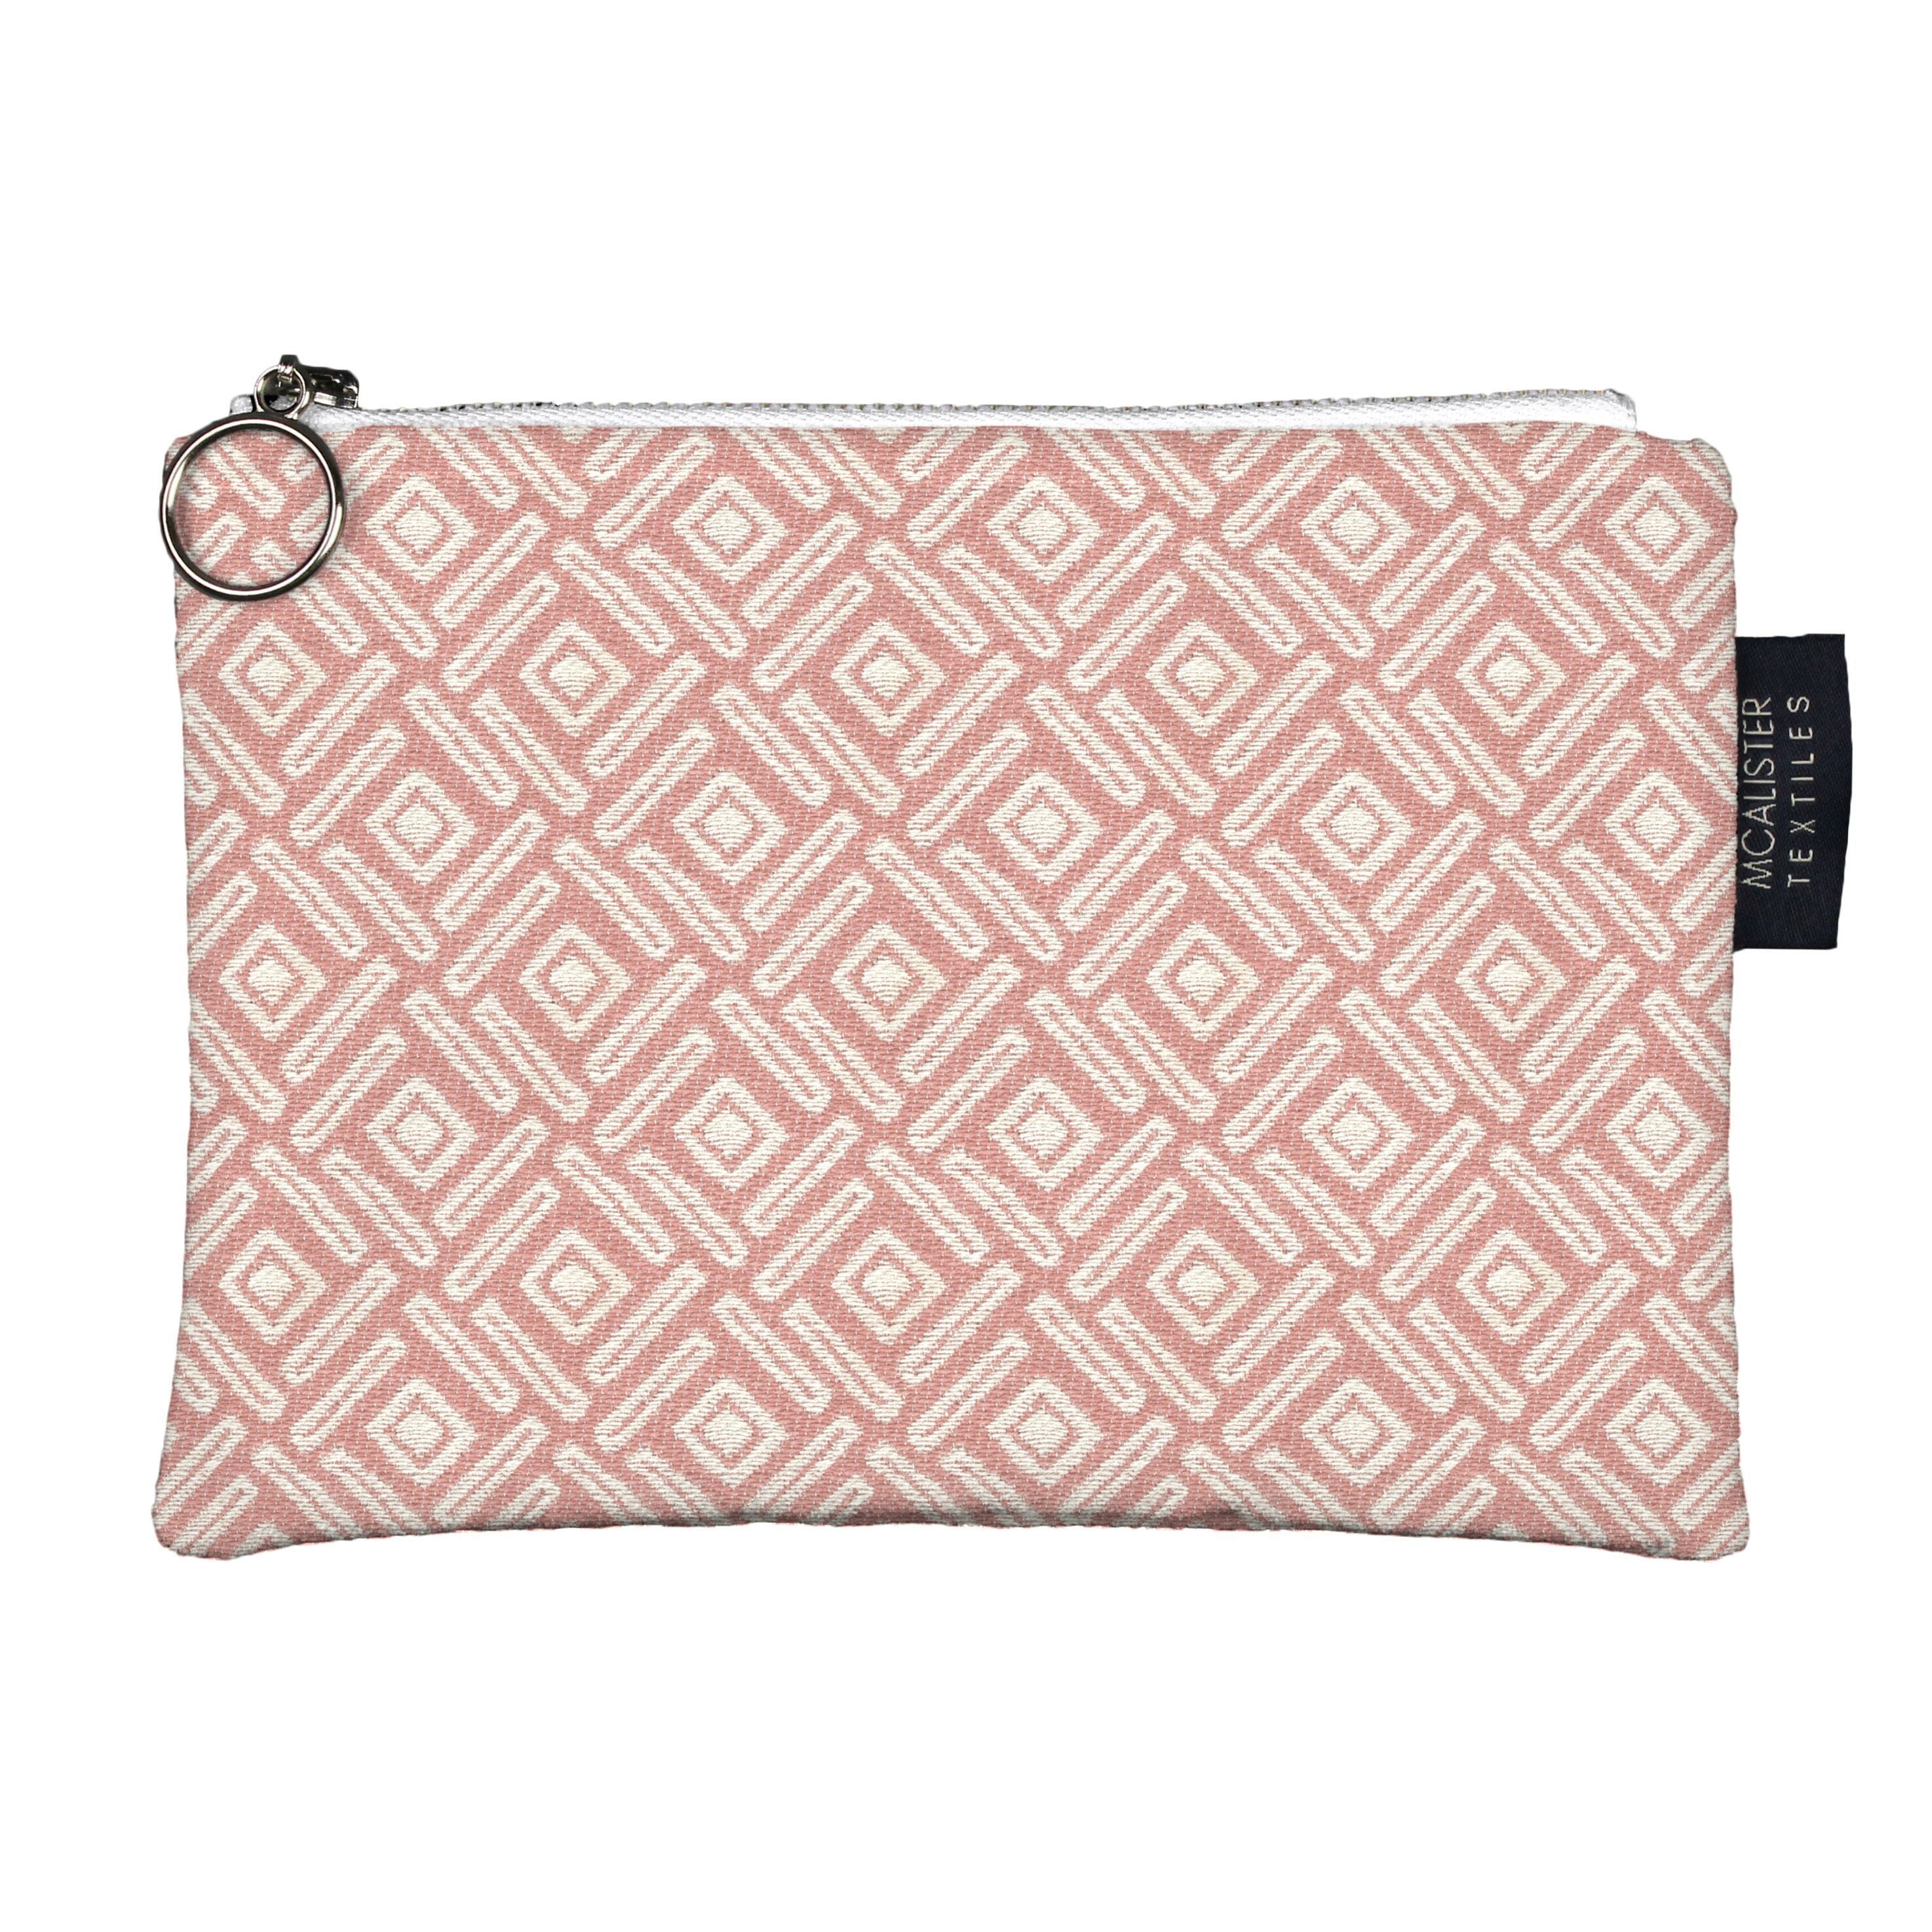 McAlister Textiles Elva Pink + Grey Makeup Bag Set Clutch Bag 